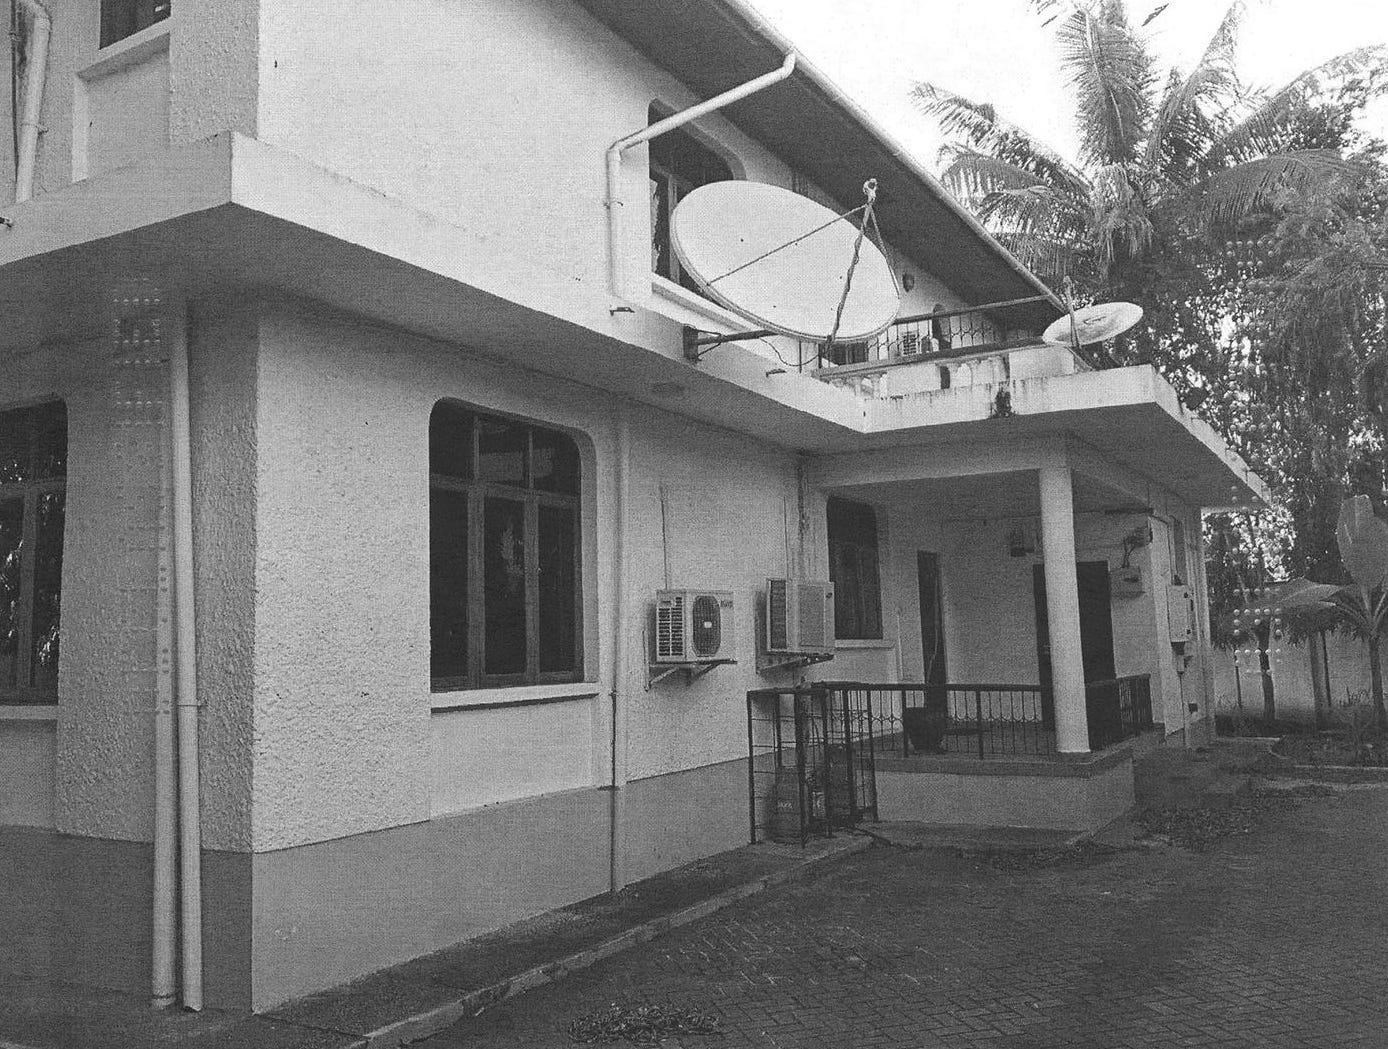 John Peterson's house in Tanzania.